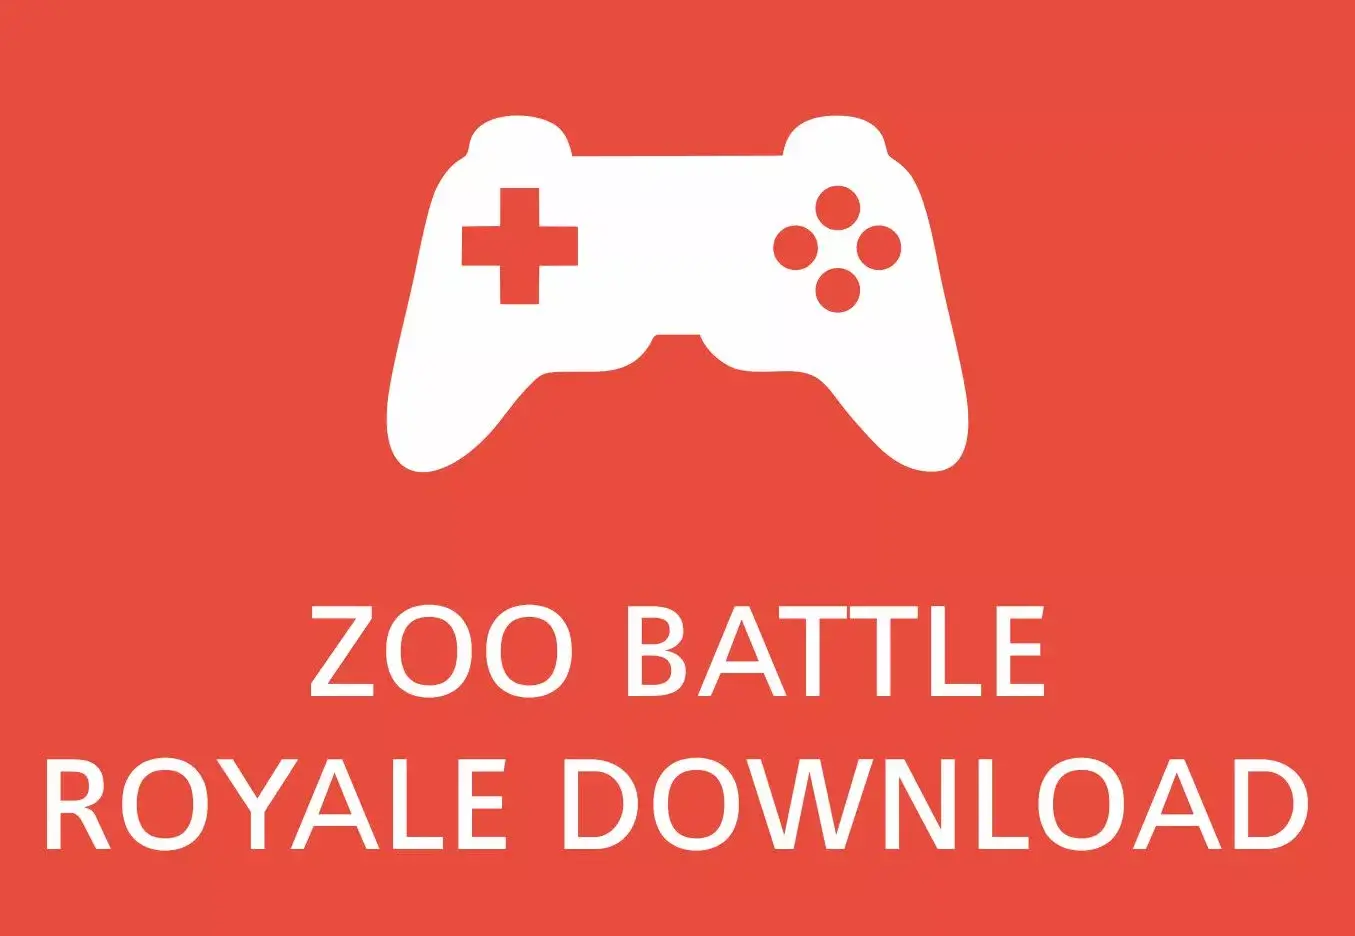 Zoo Battle Royale